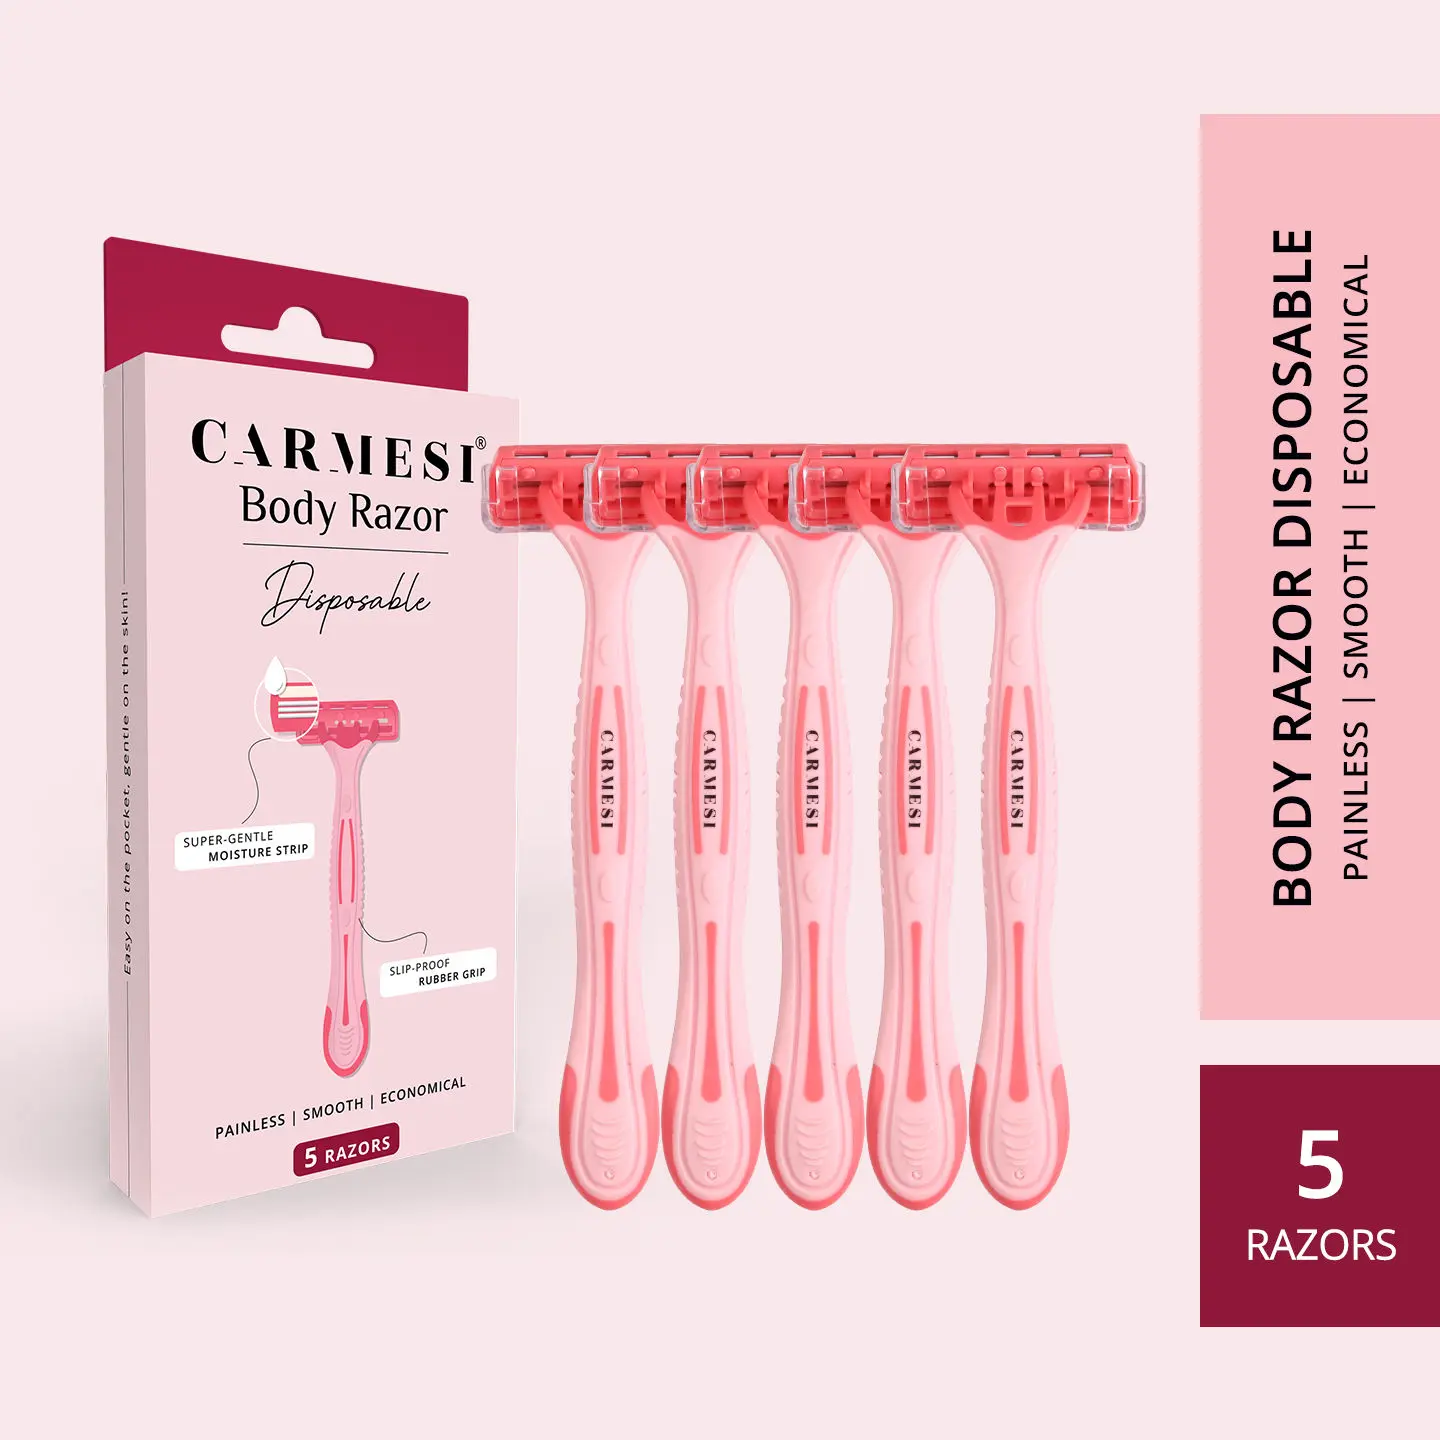 Carmesi Disposable Body Razors for Women - Pack of 5 | Aloe Vera & Vitamin E Moisture Strip For Smooth & Painless Hair Removal | Slip-Proof Rubber Grip | Safe, Hygienic & Economical